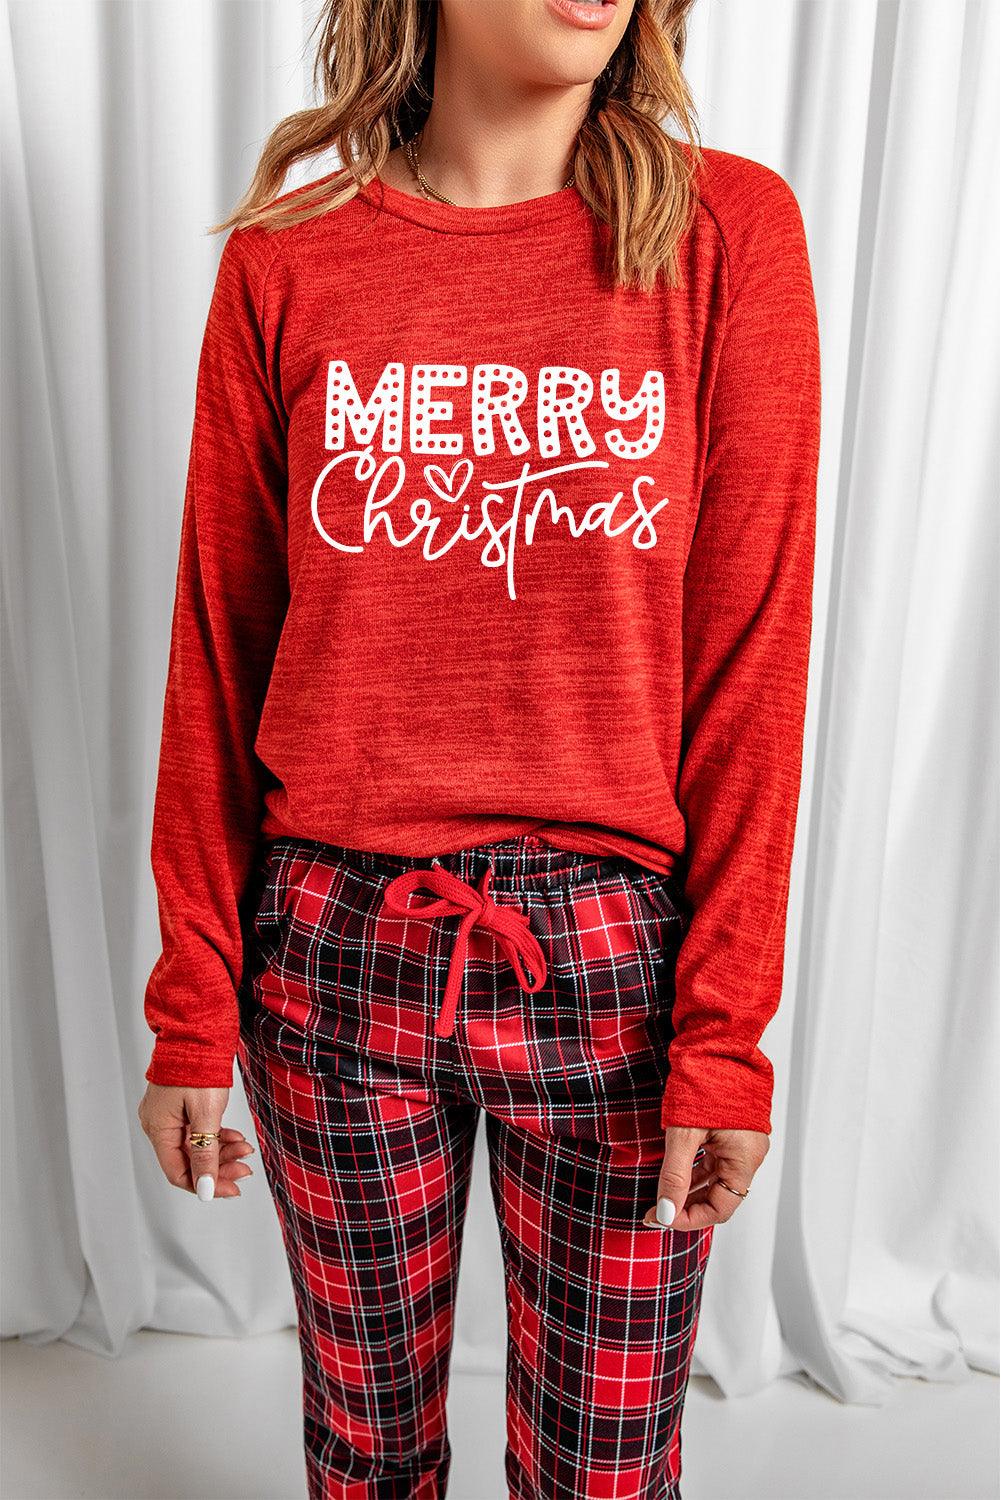 Red MERRY Christmas Graphic Top Plaid Pants Set - L & M Kee, LLC